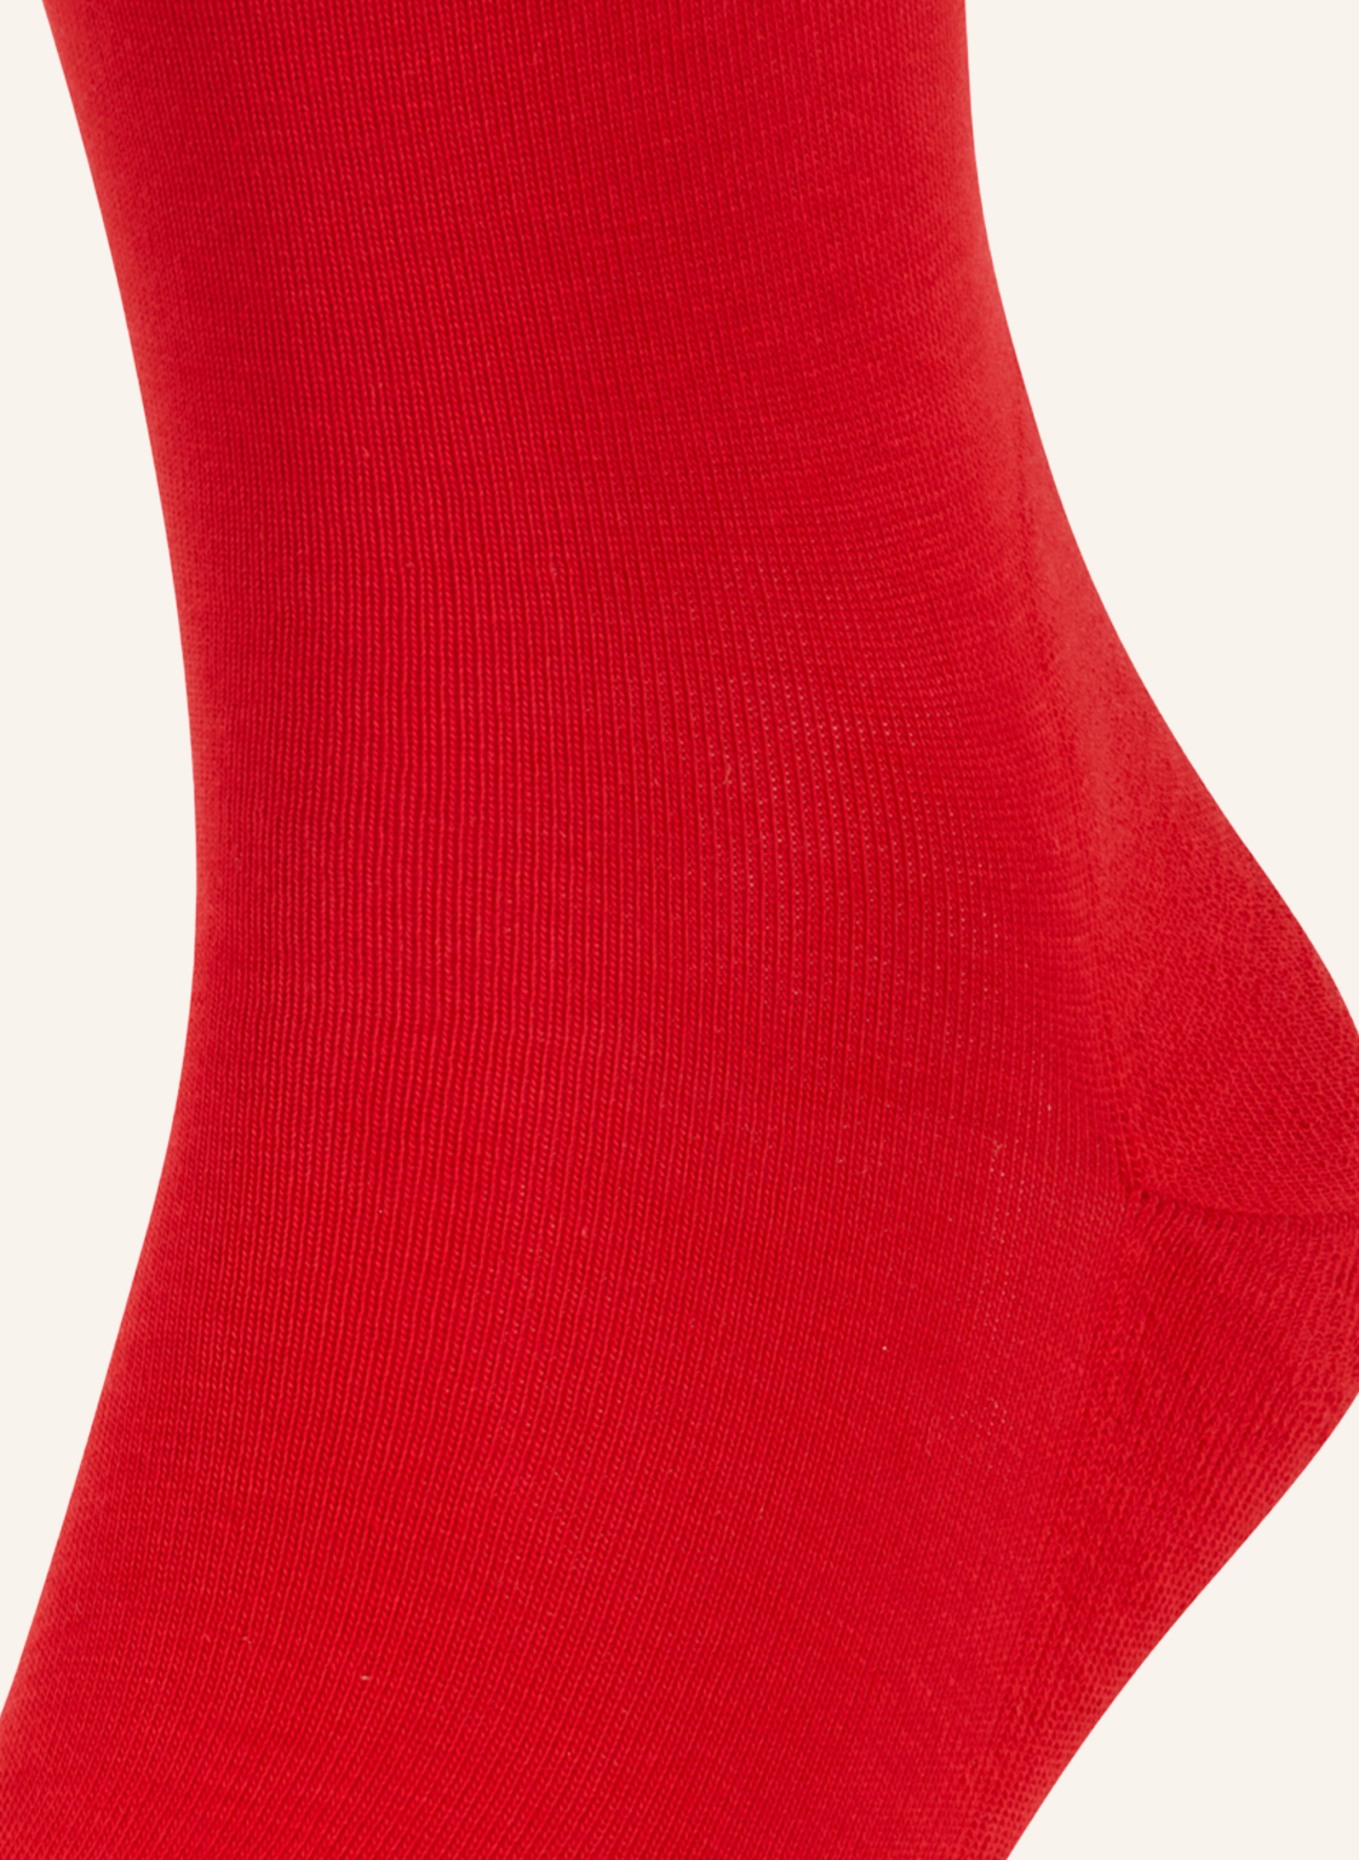 FALKE Socken RUN ERGO, Farbe: 8150 FIRE (Bild 3)